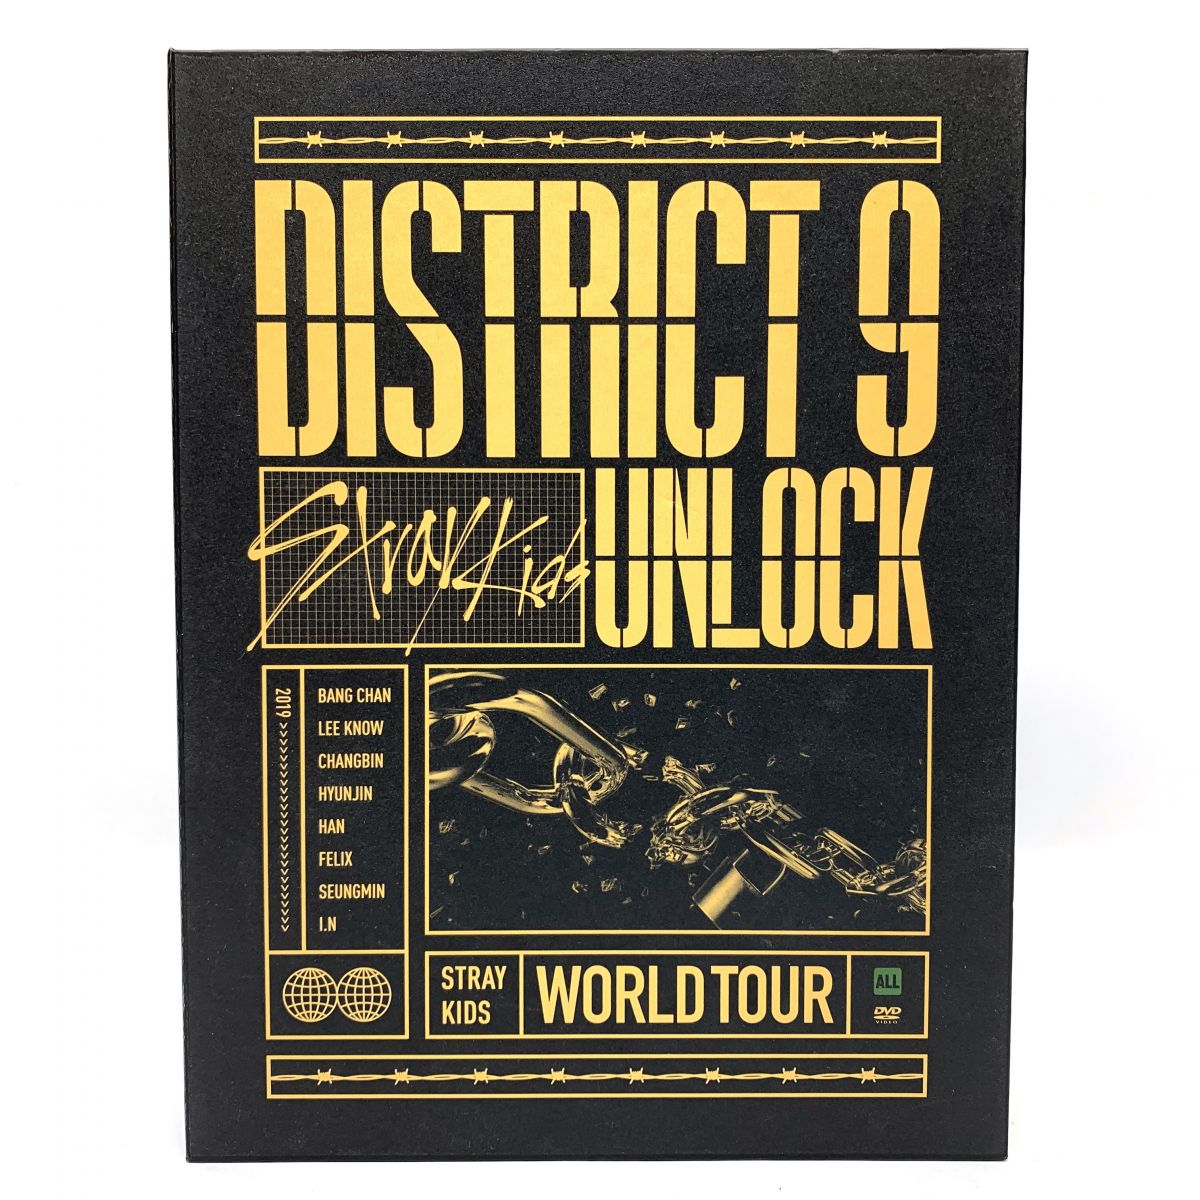 DVD Stray Kids World Tour ’District 9：Unlock’in SEOUL 輸入盤 ※中古 【津山店】